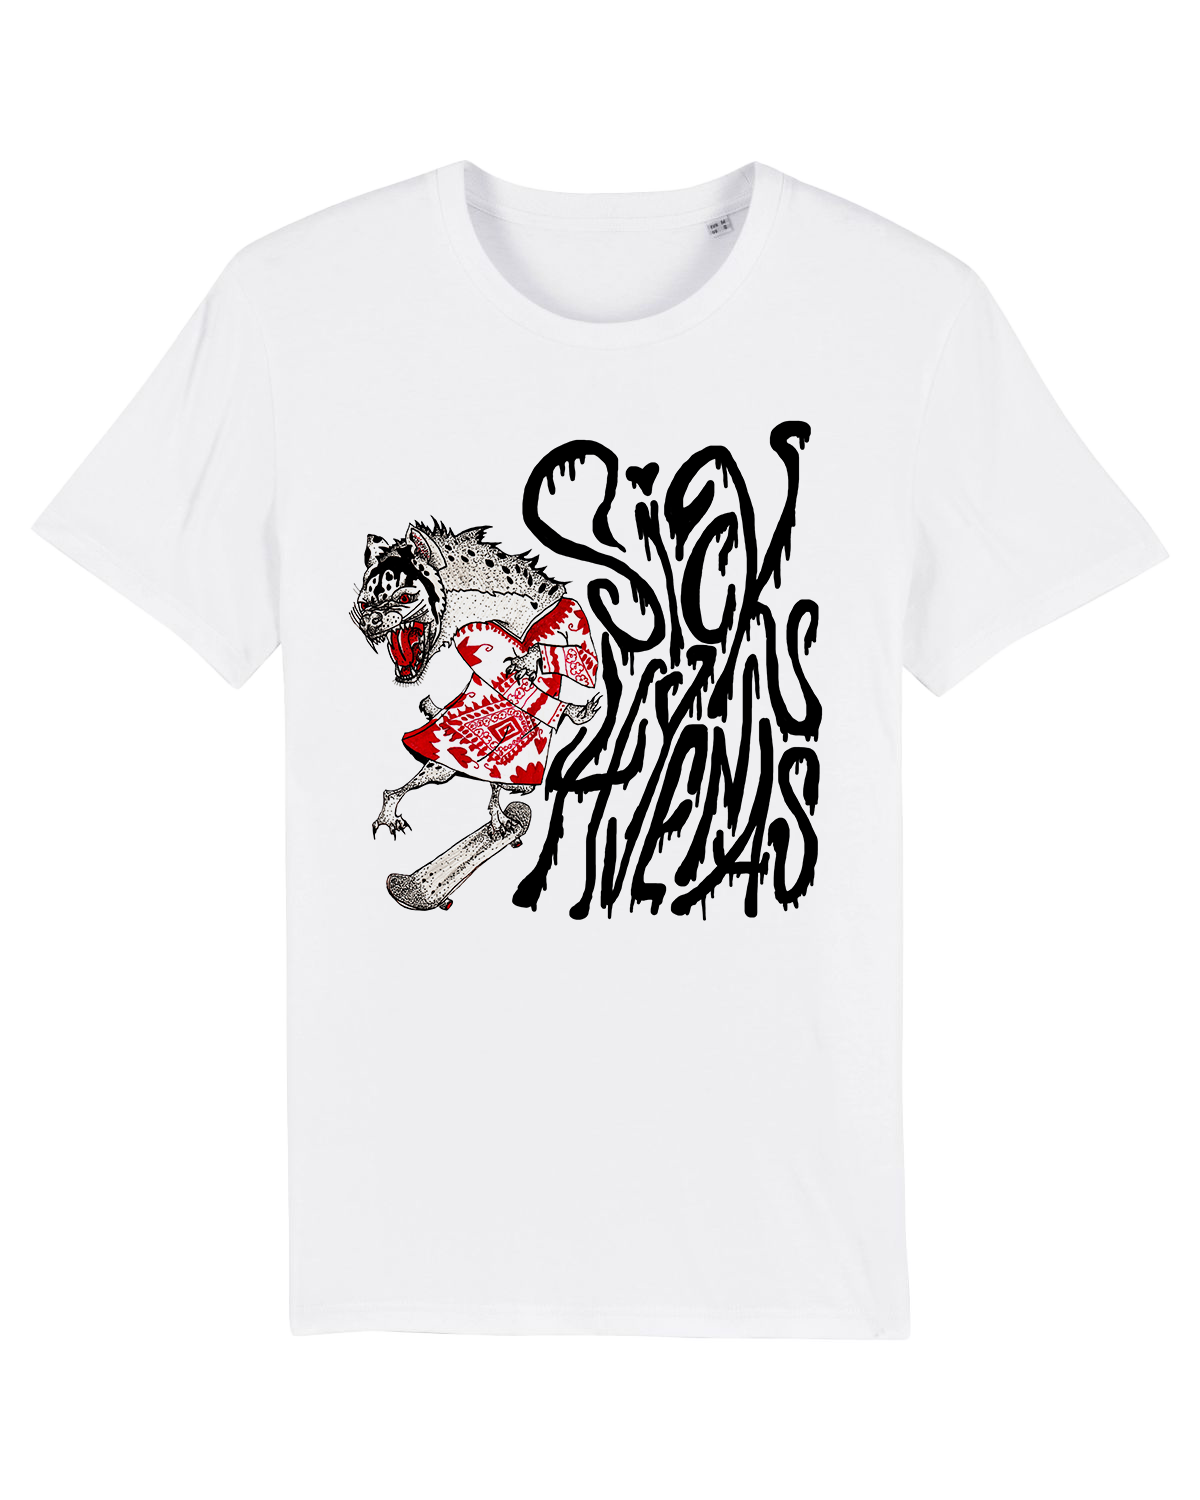 Sick Hyenas - Hyena (Shirt)